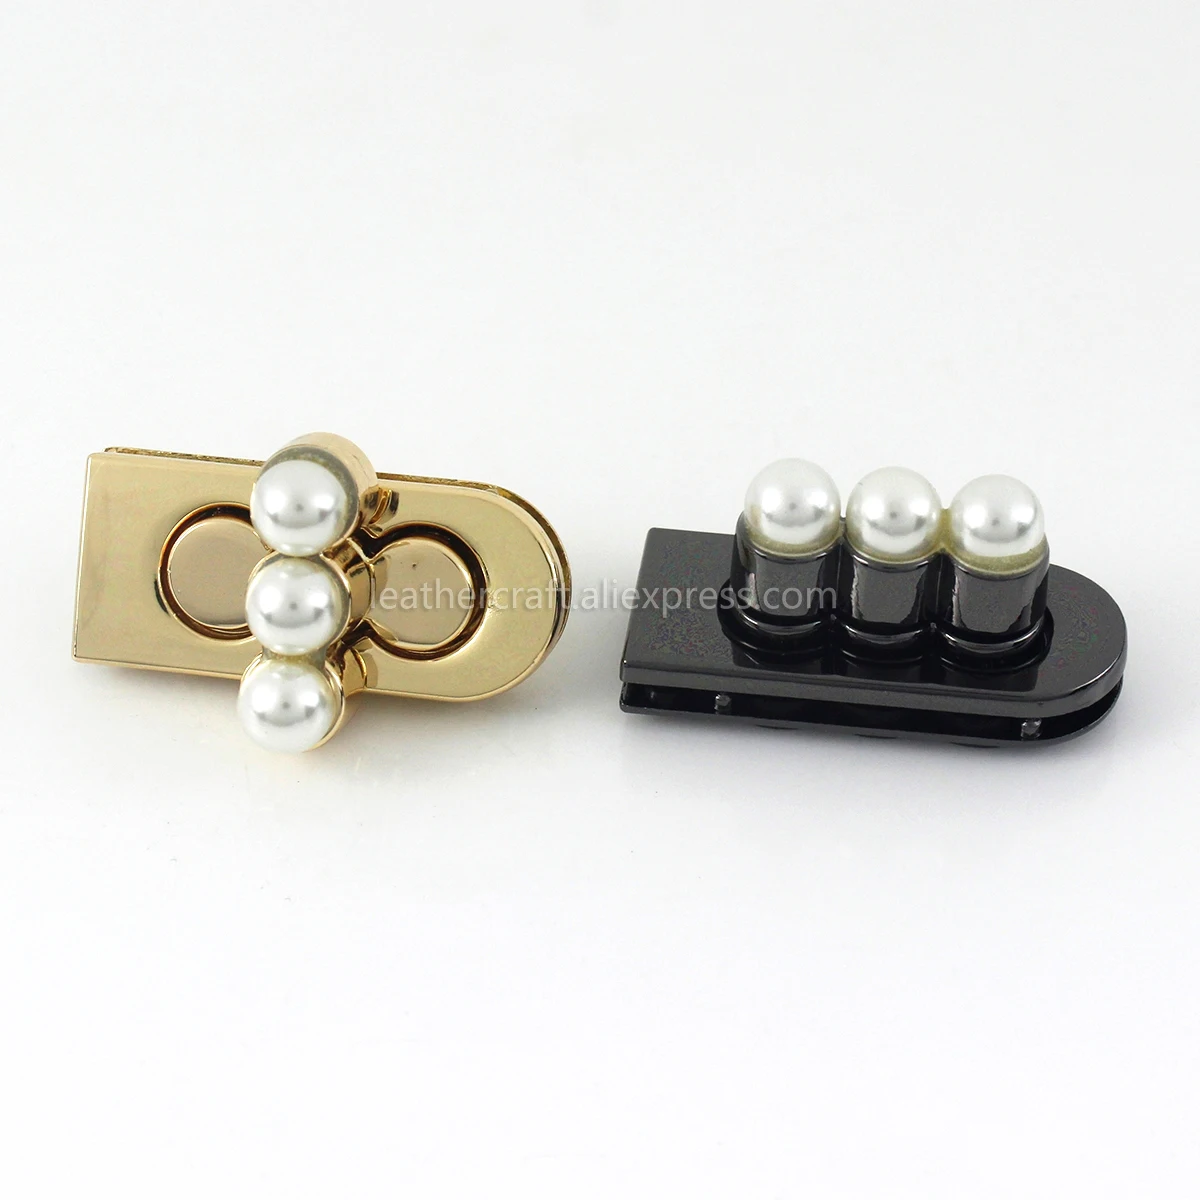 

1pcs Metal Pearl Turn Lock Push Lock Clasp Fashion Bag Laggage Purse Leather Craft Closure DIY Hardware Accessories